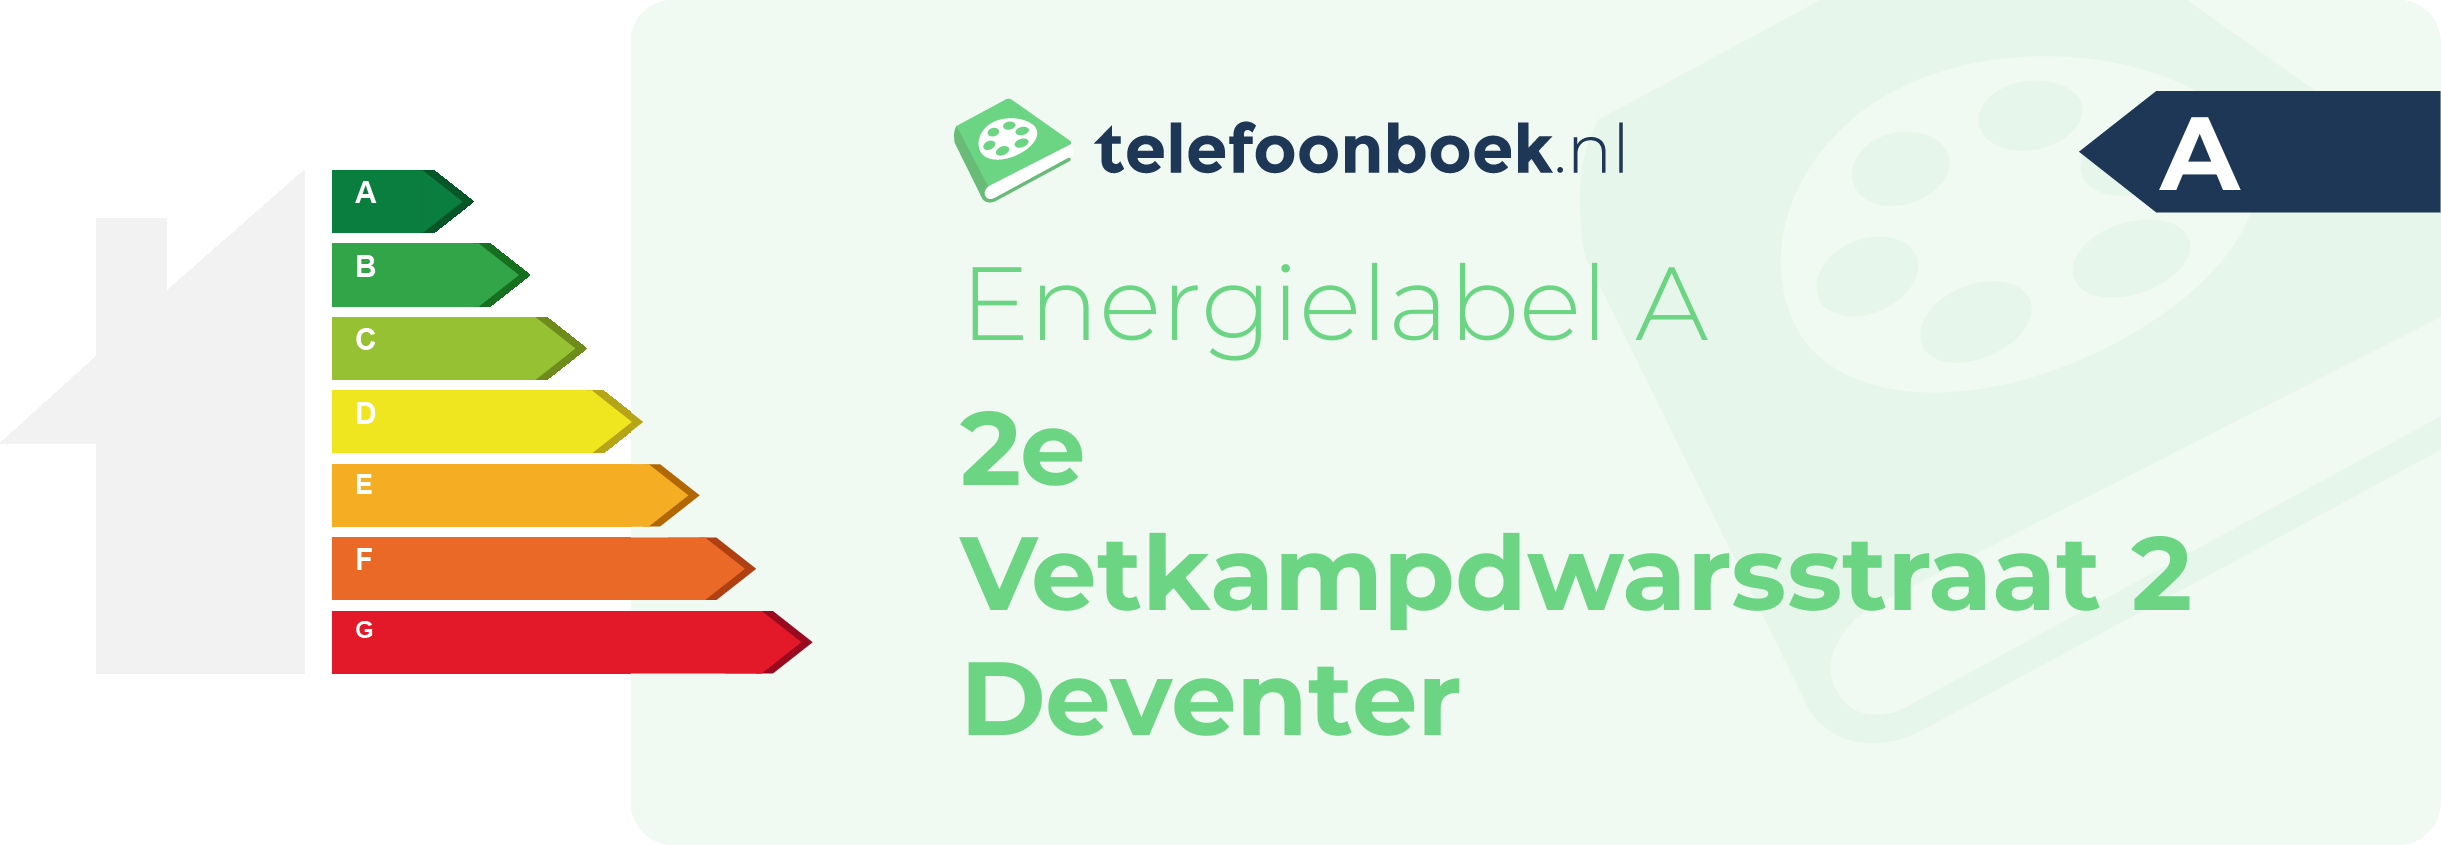 Energielabel 2e Vetkampdwarsstraat 2 Deventer